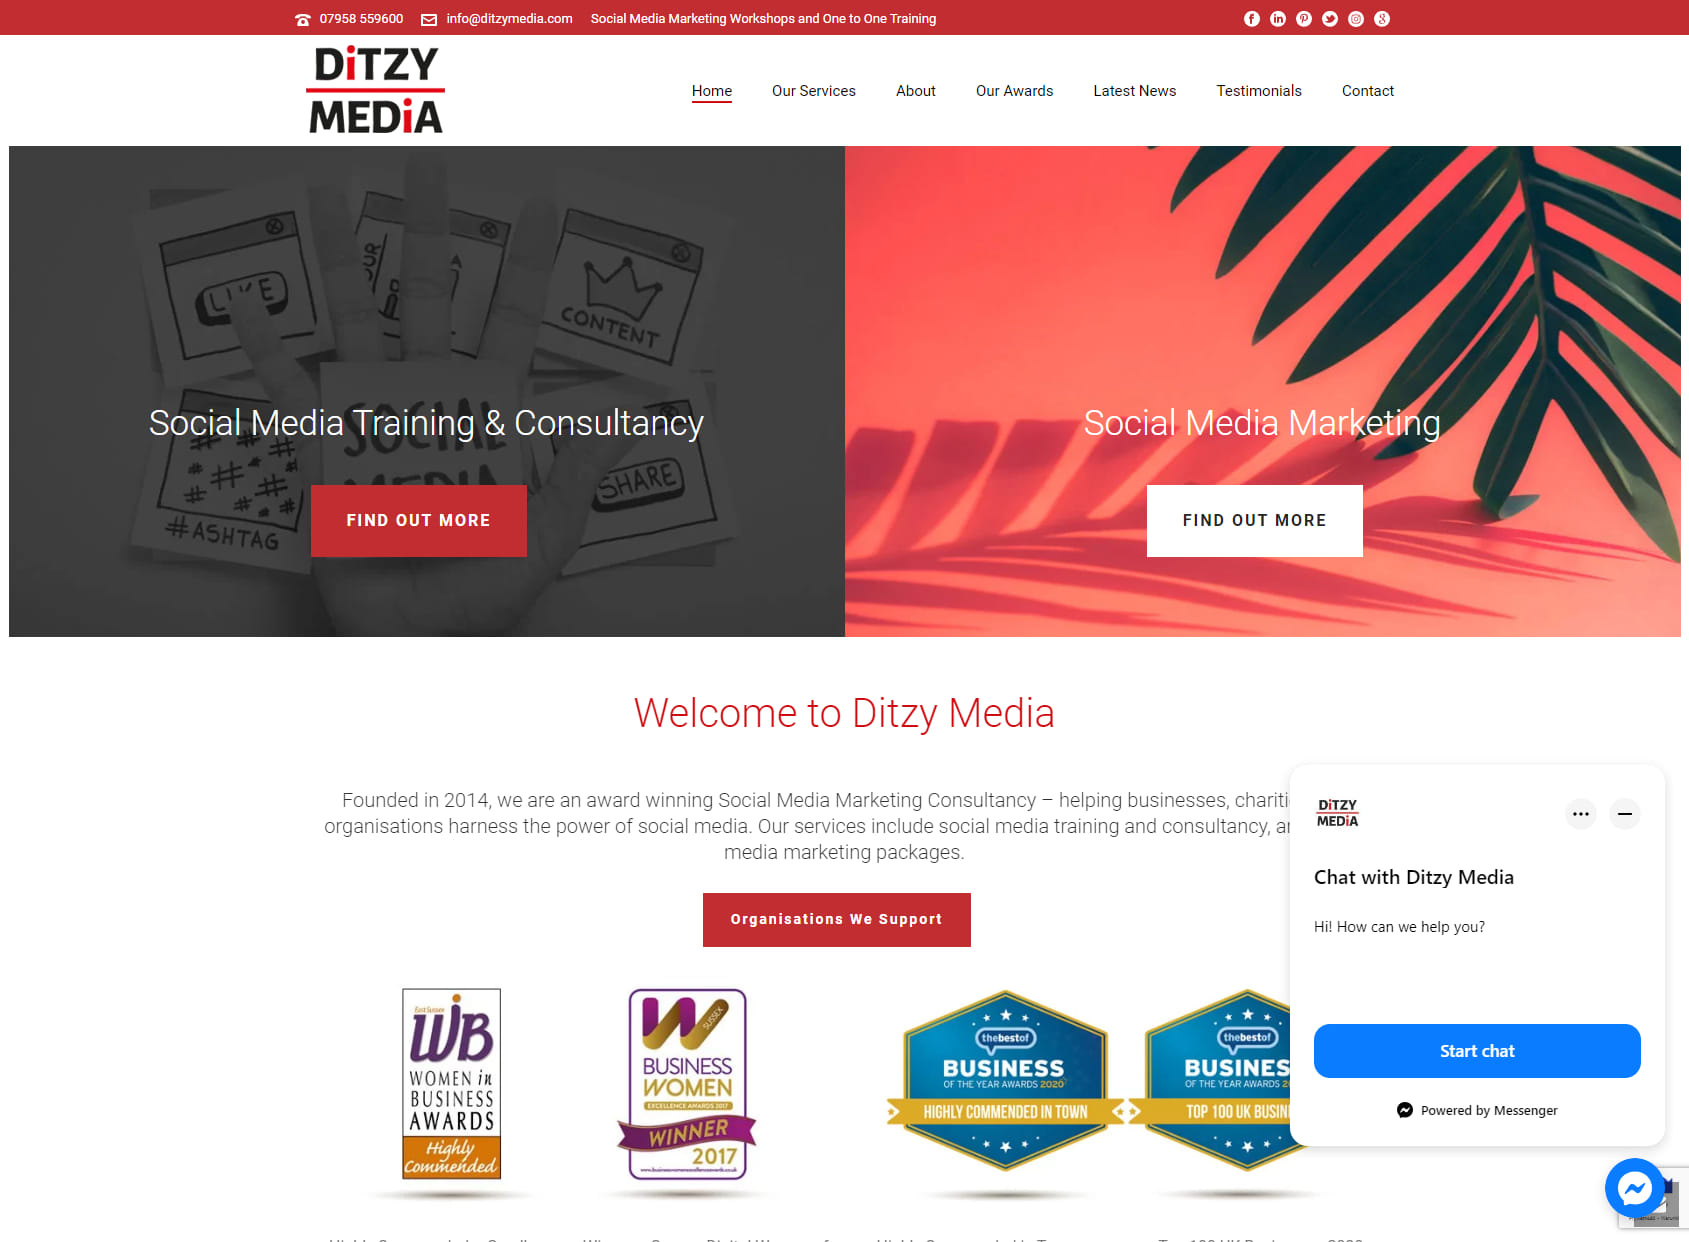 Ditzy Media